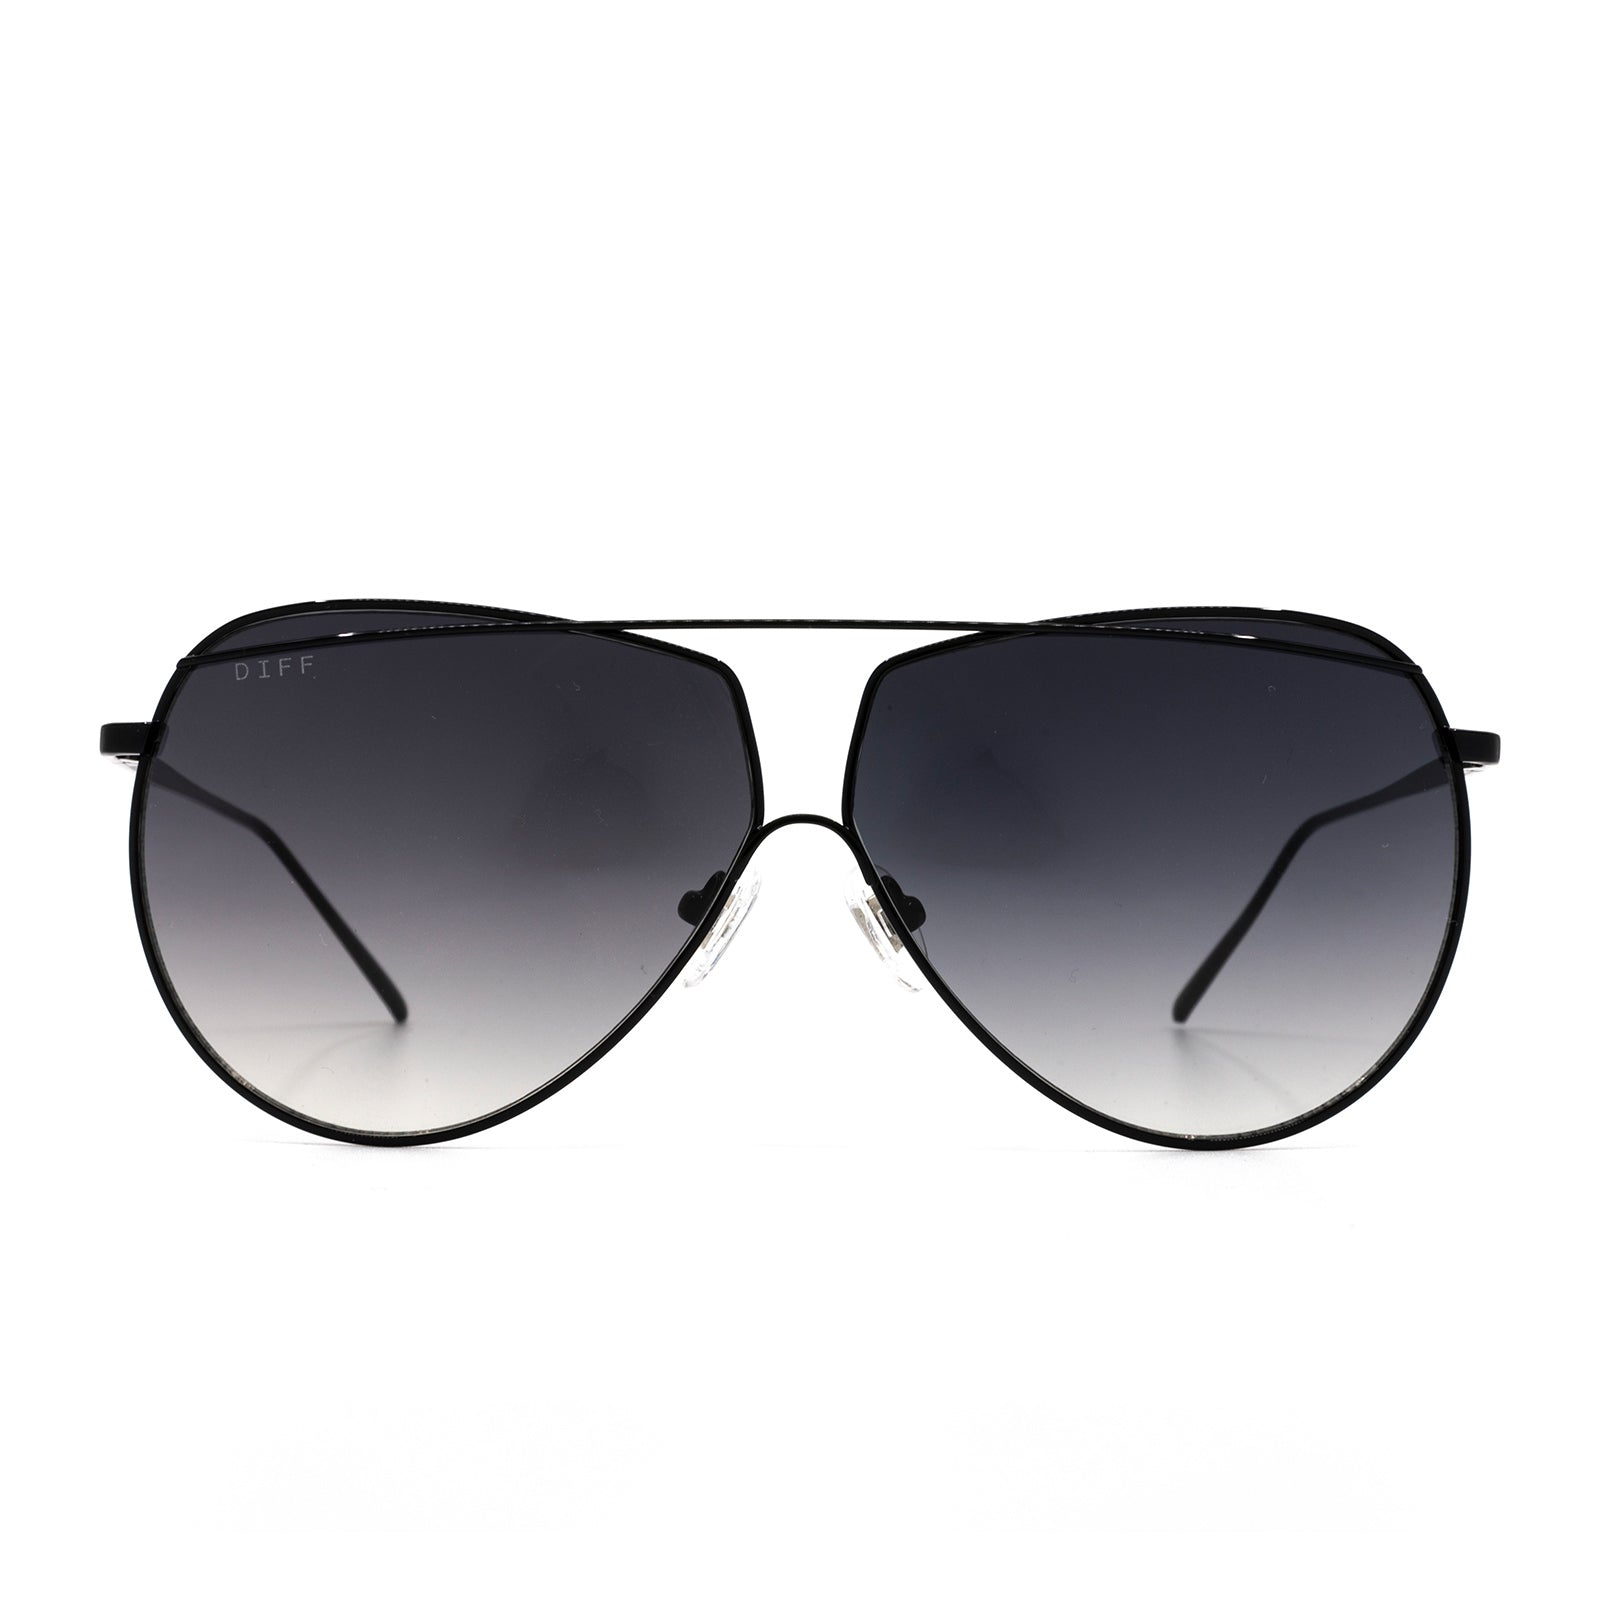 Maeve Black Gradient Sleek Aviator Sunglasses - DIFF